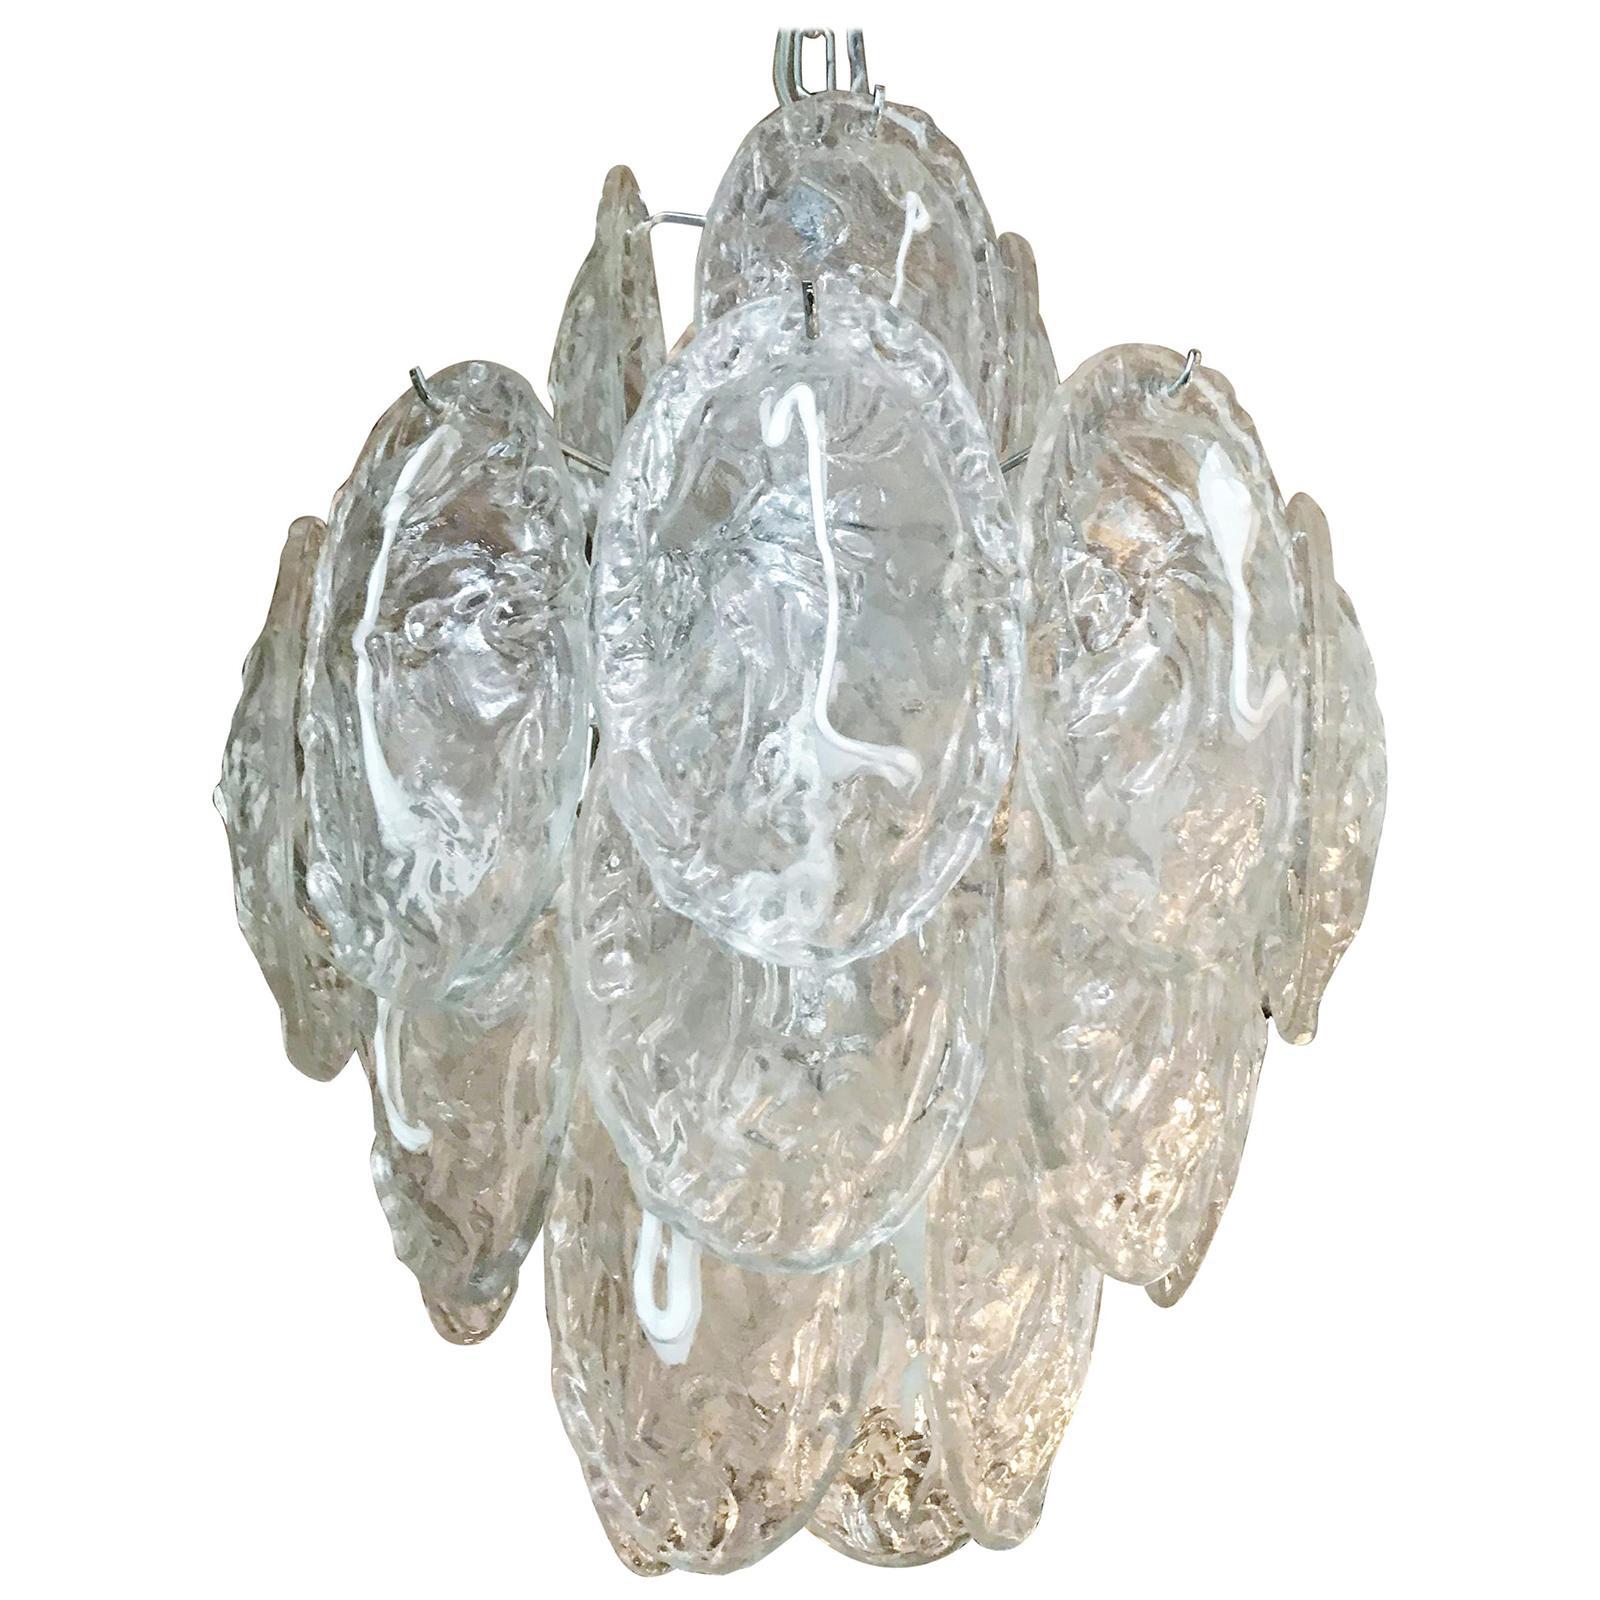 Vintage Italian Chandelier w / Murano Glass Shells Designed by Mazzega, c 1960s For Sale